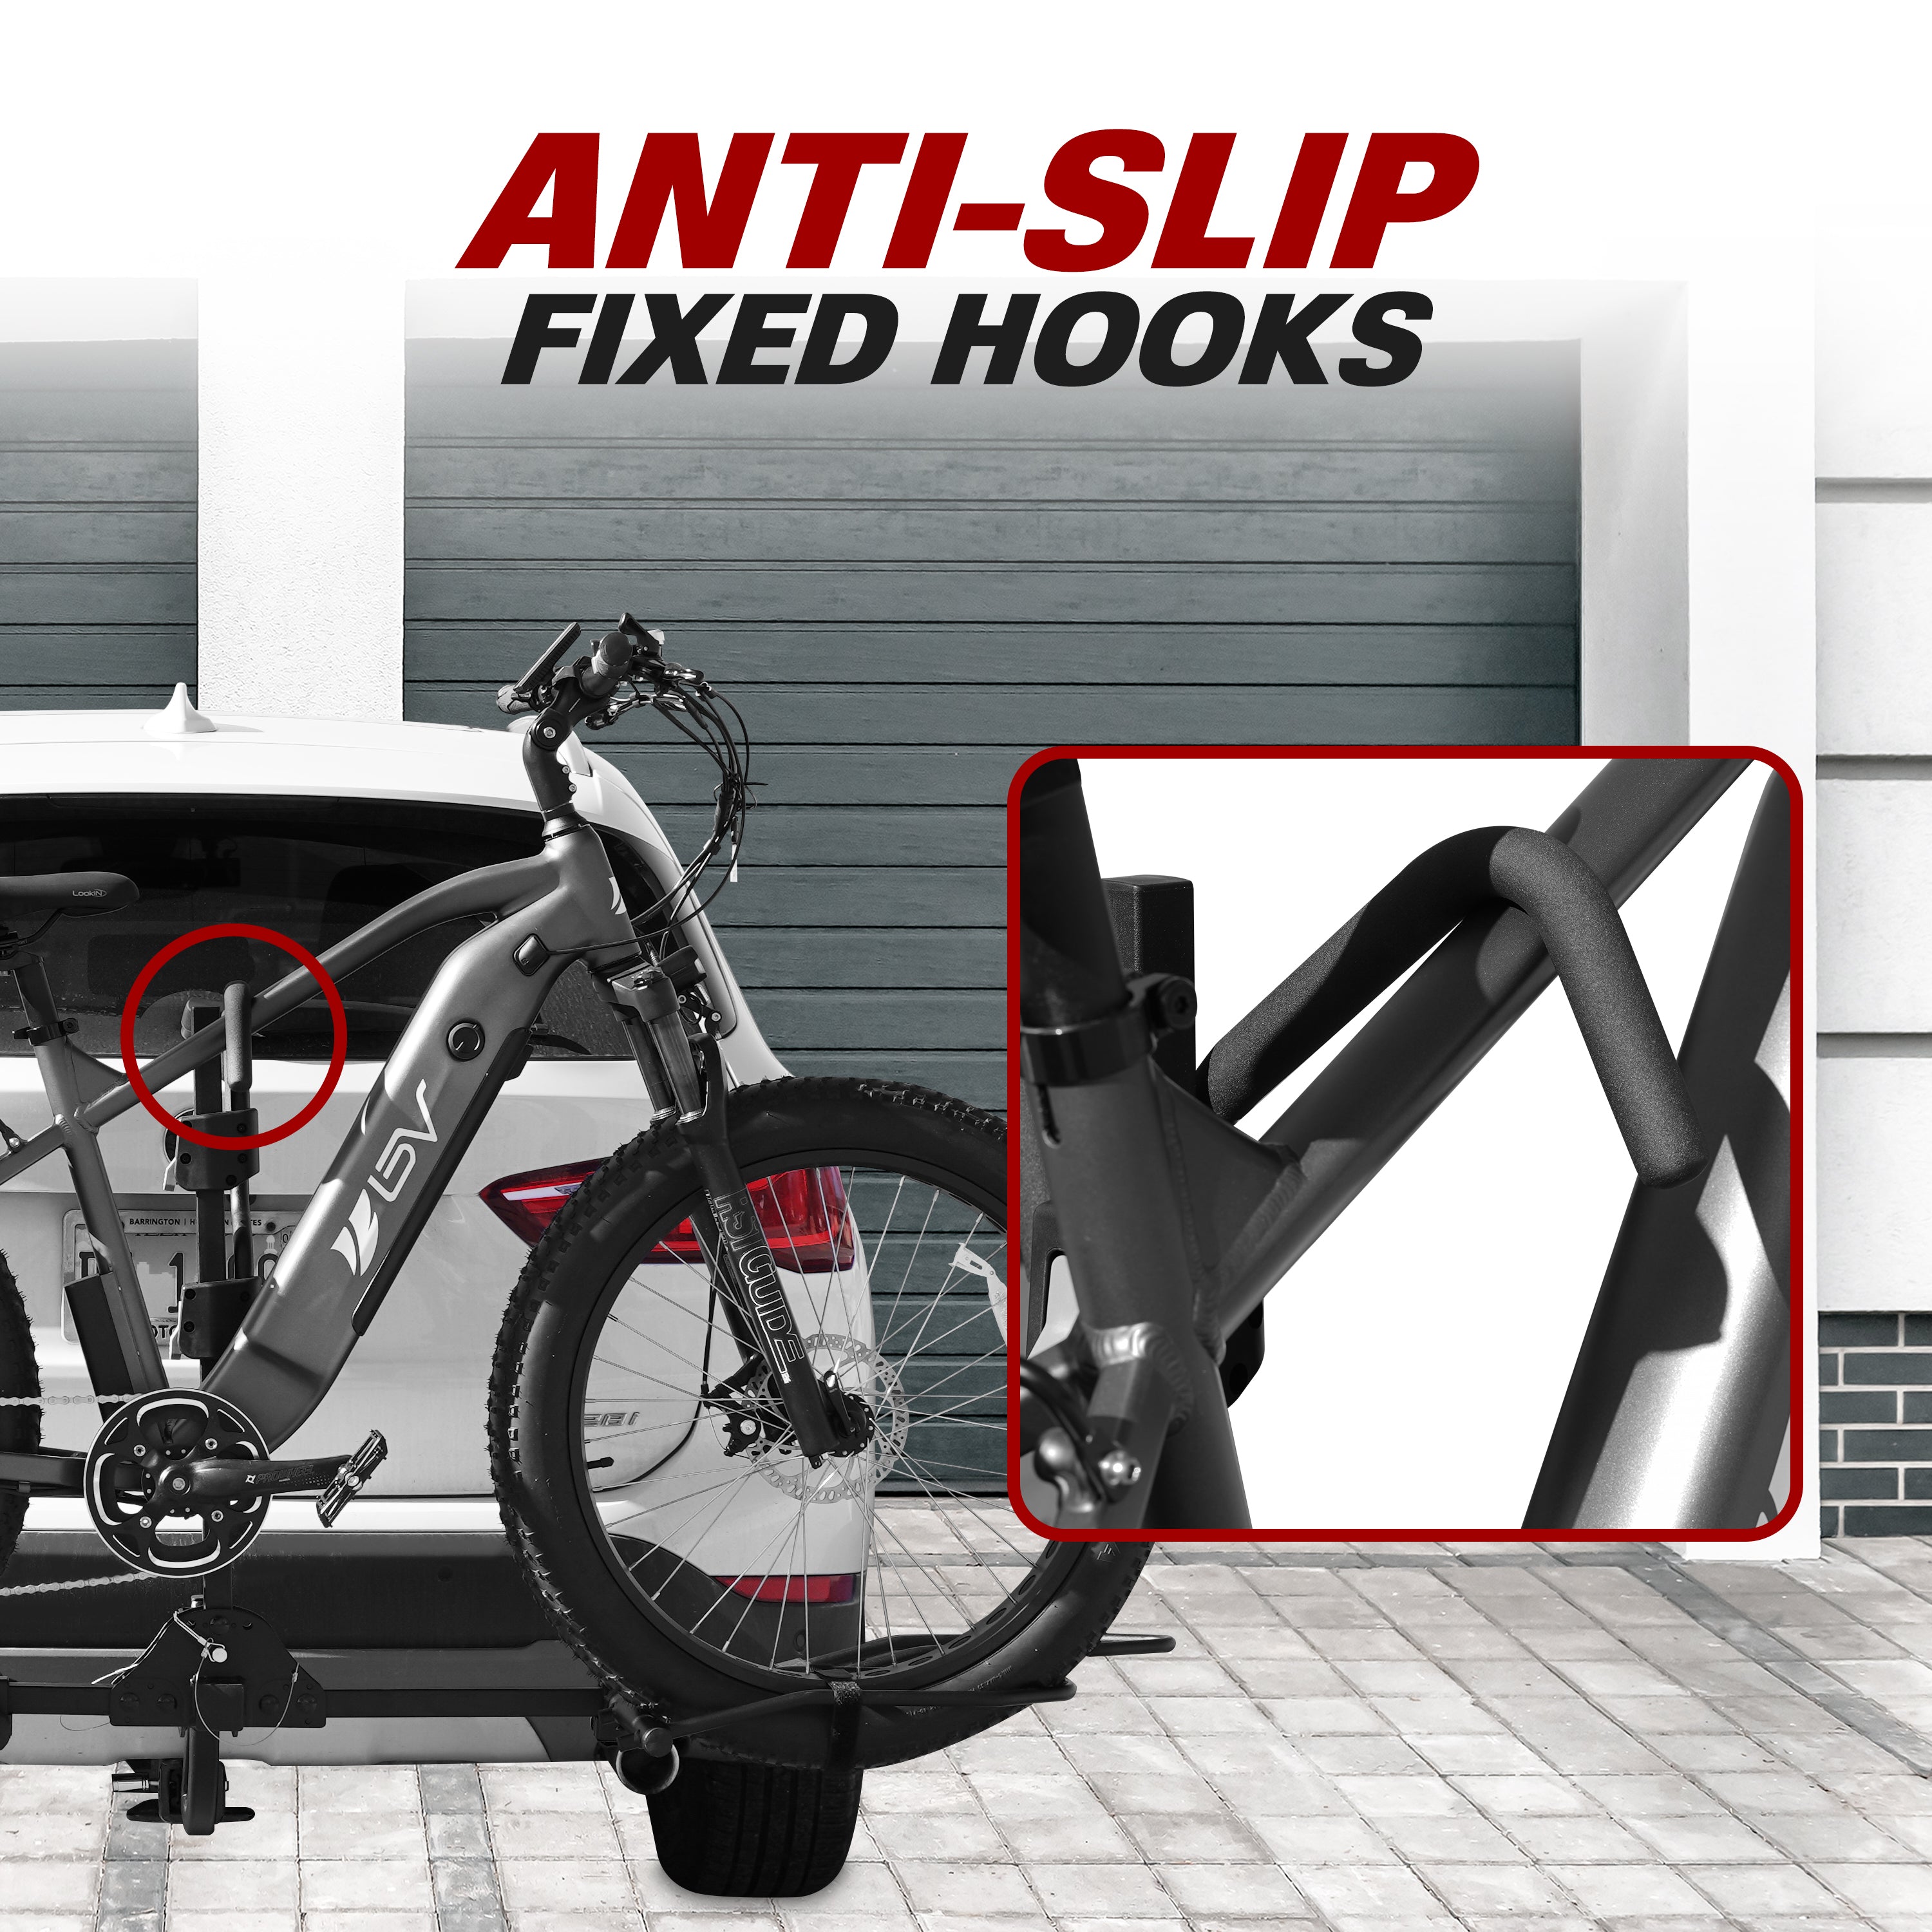 Anti-Slip Fixed Hooks